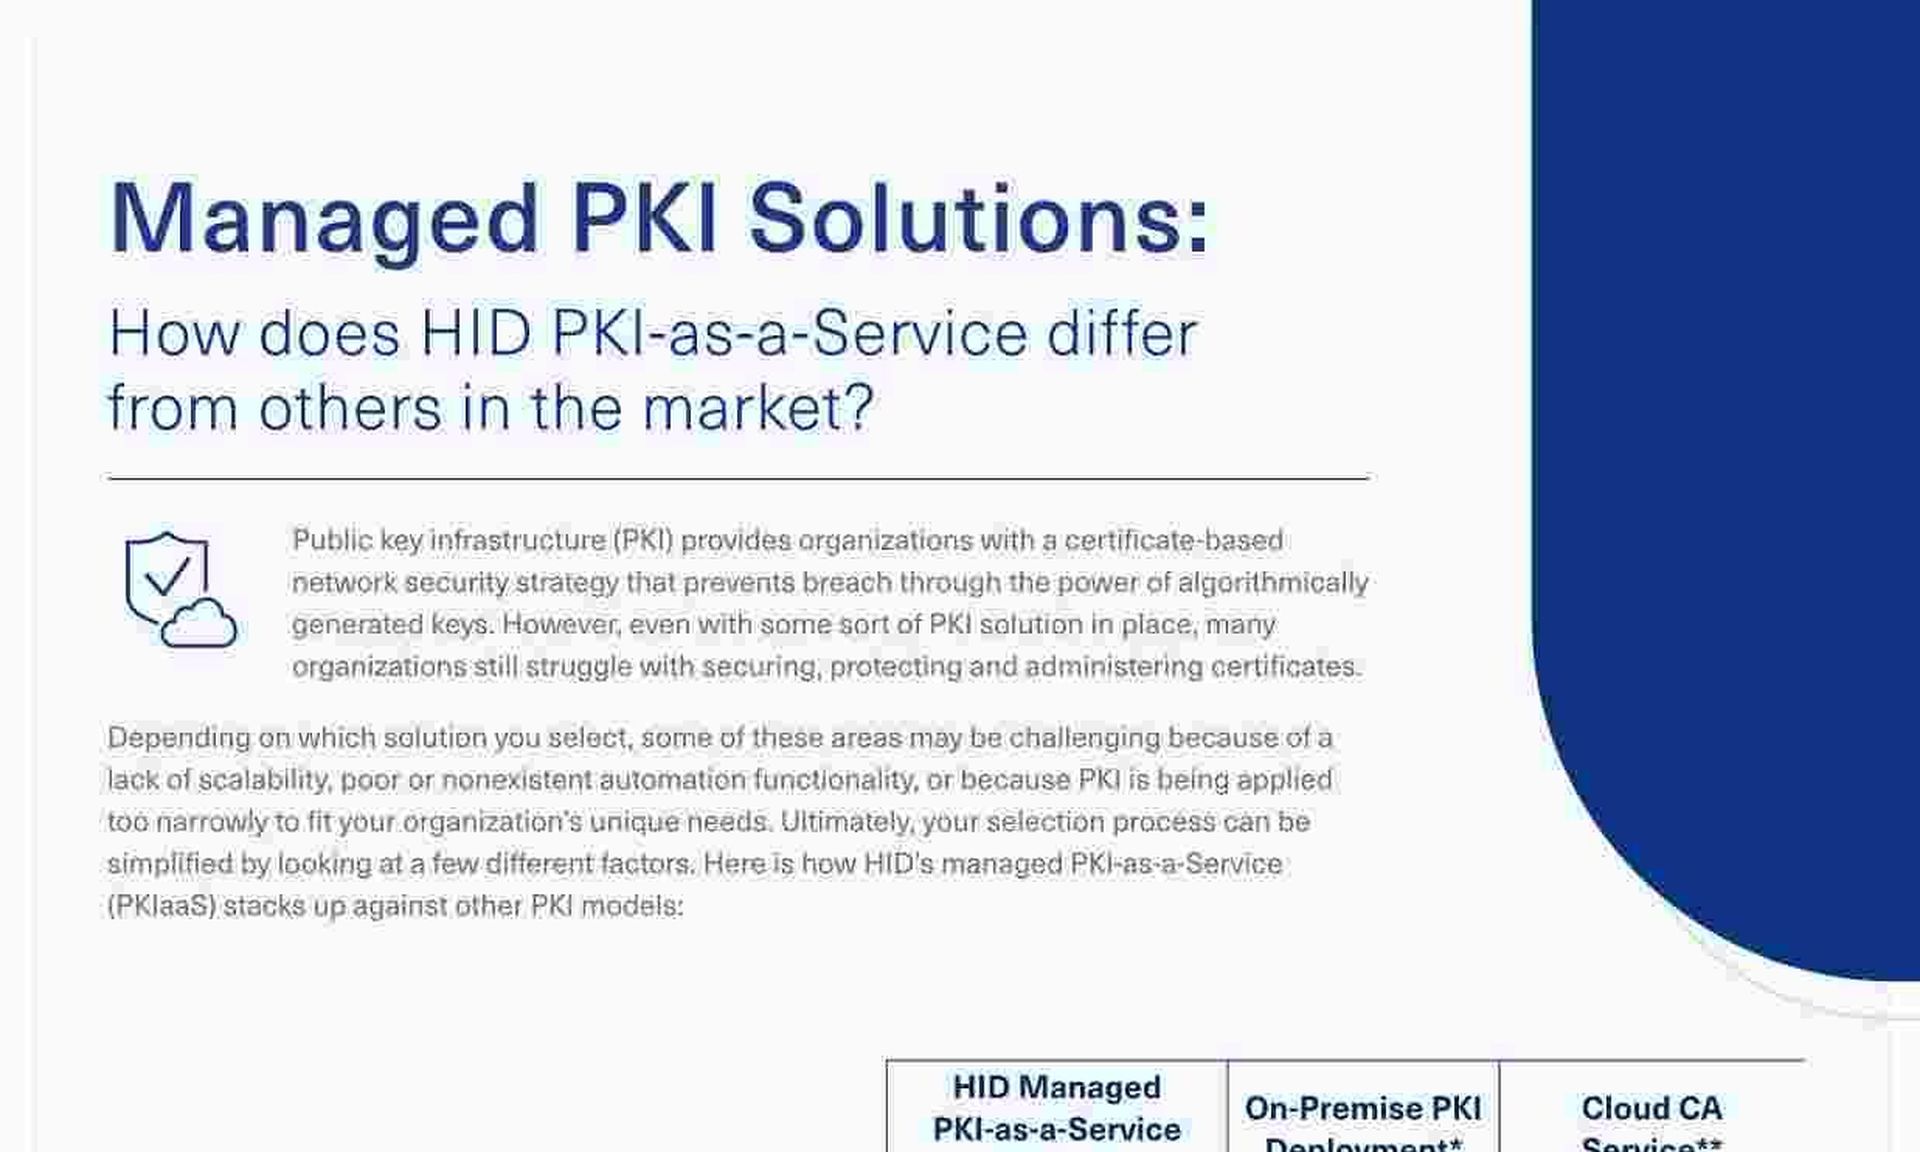 HID PKI-as-a-Service